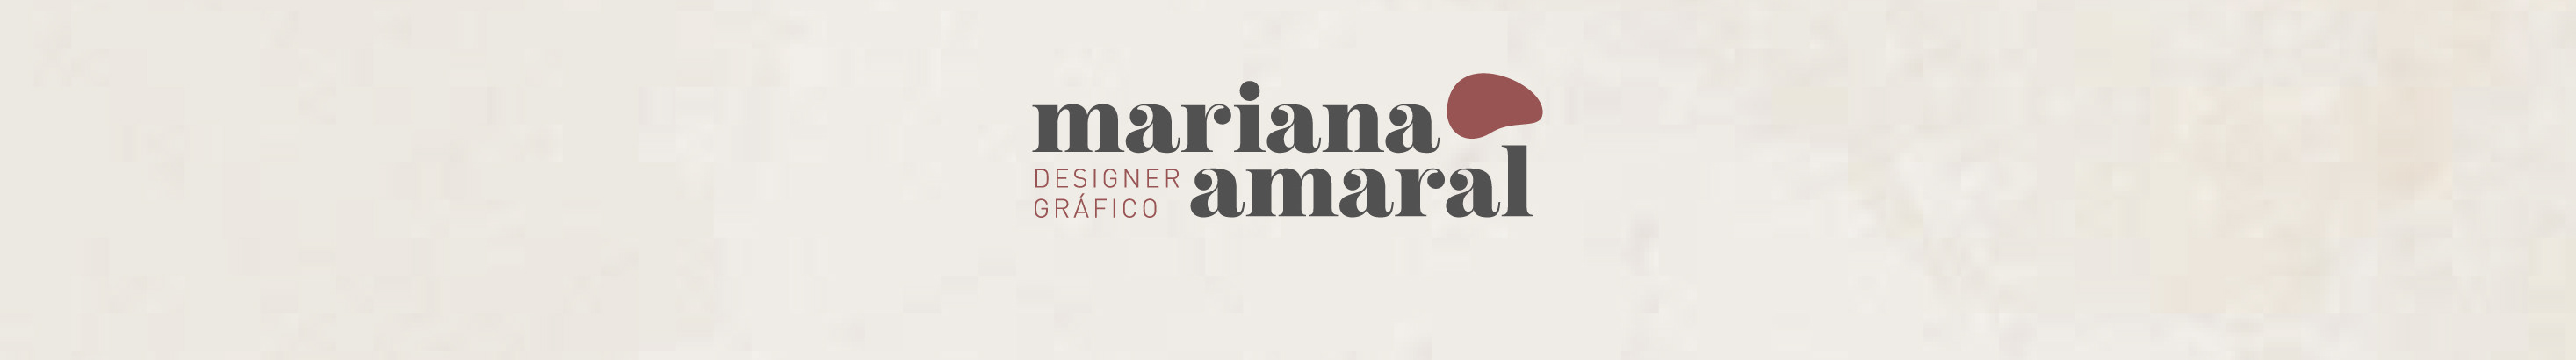 Mariana Amarals profilbanner